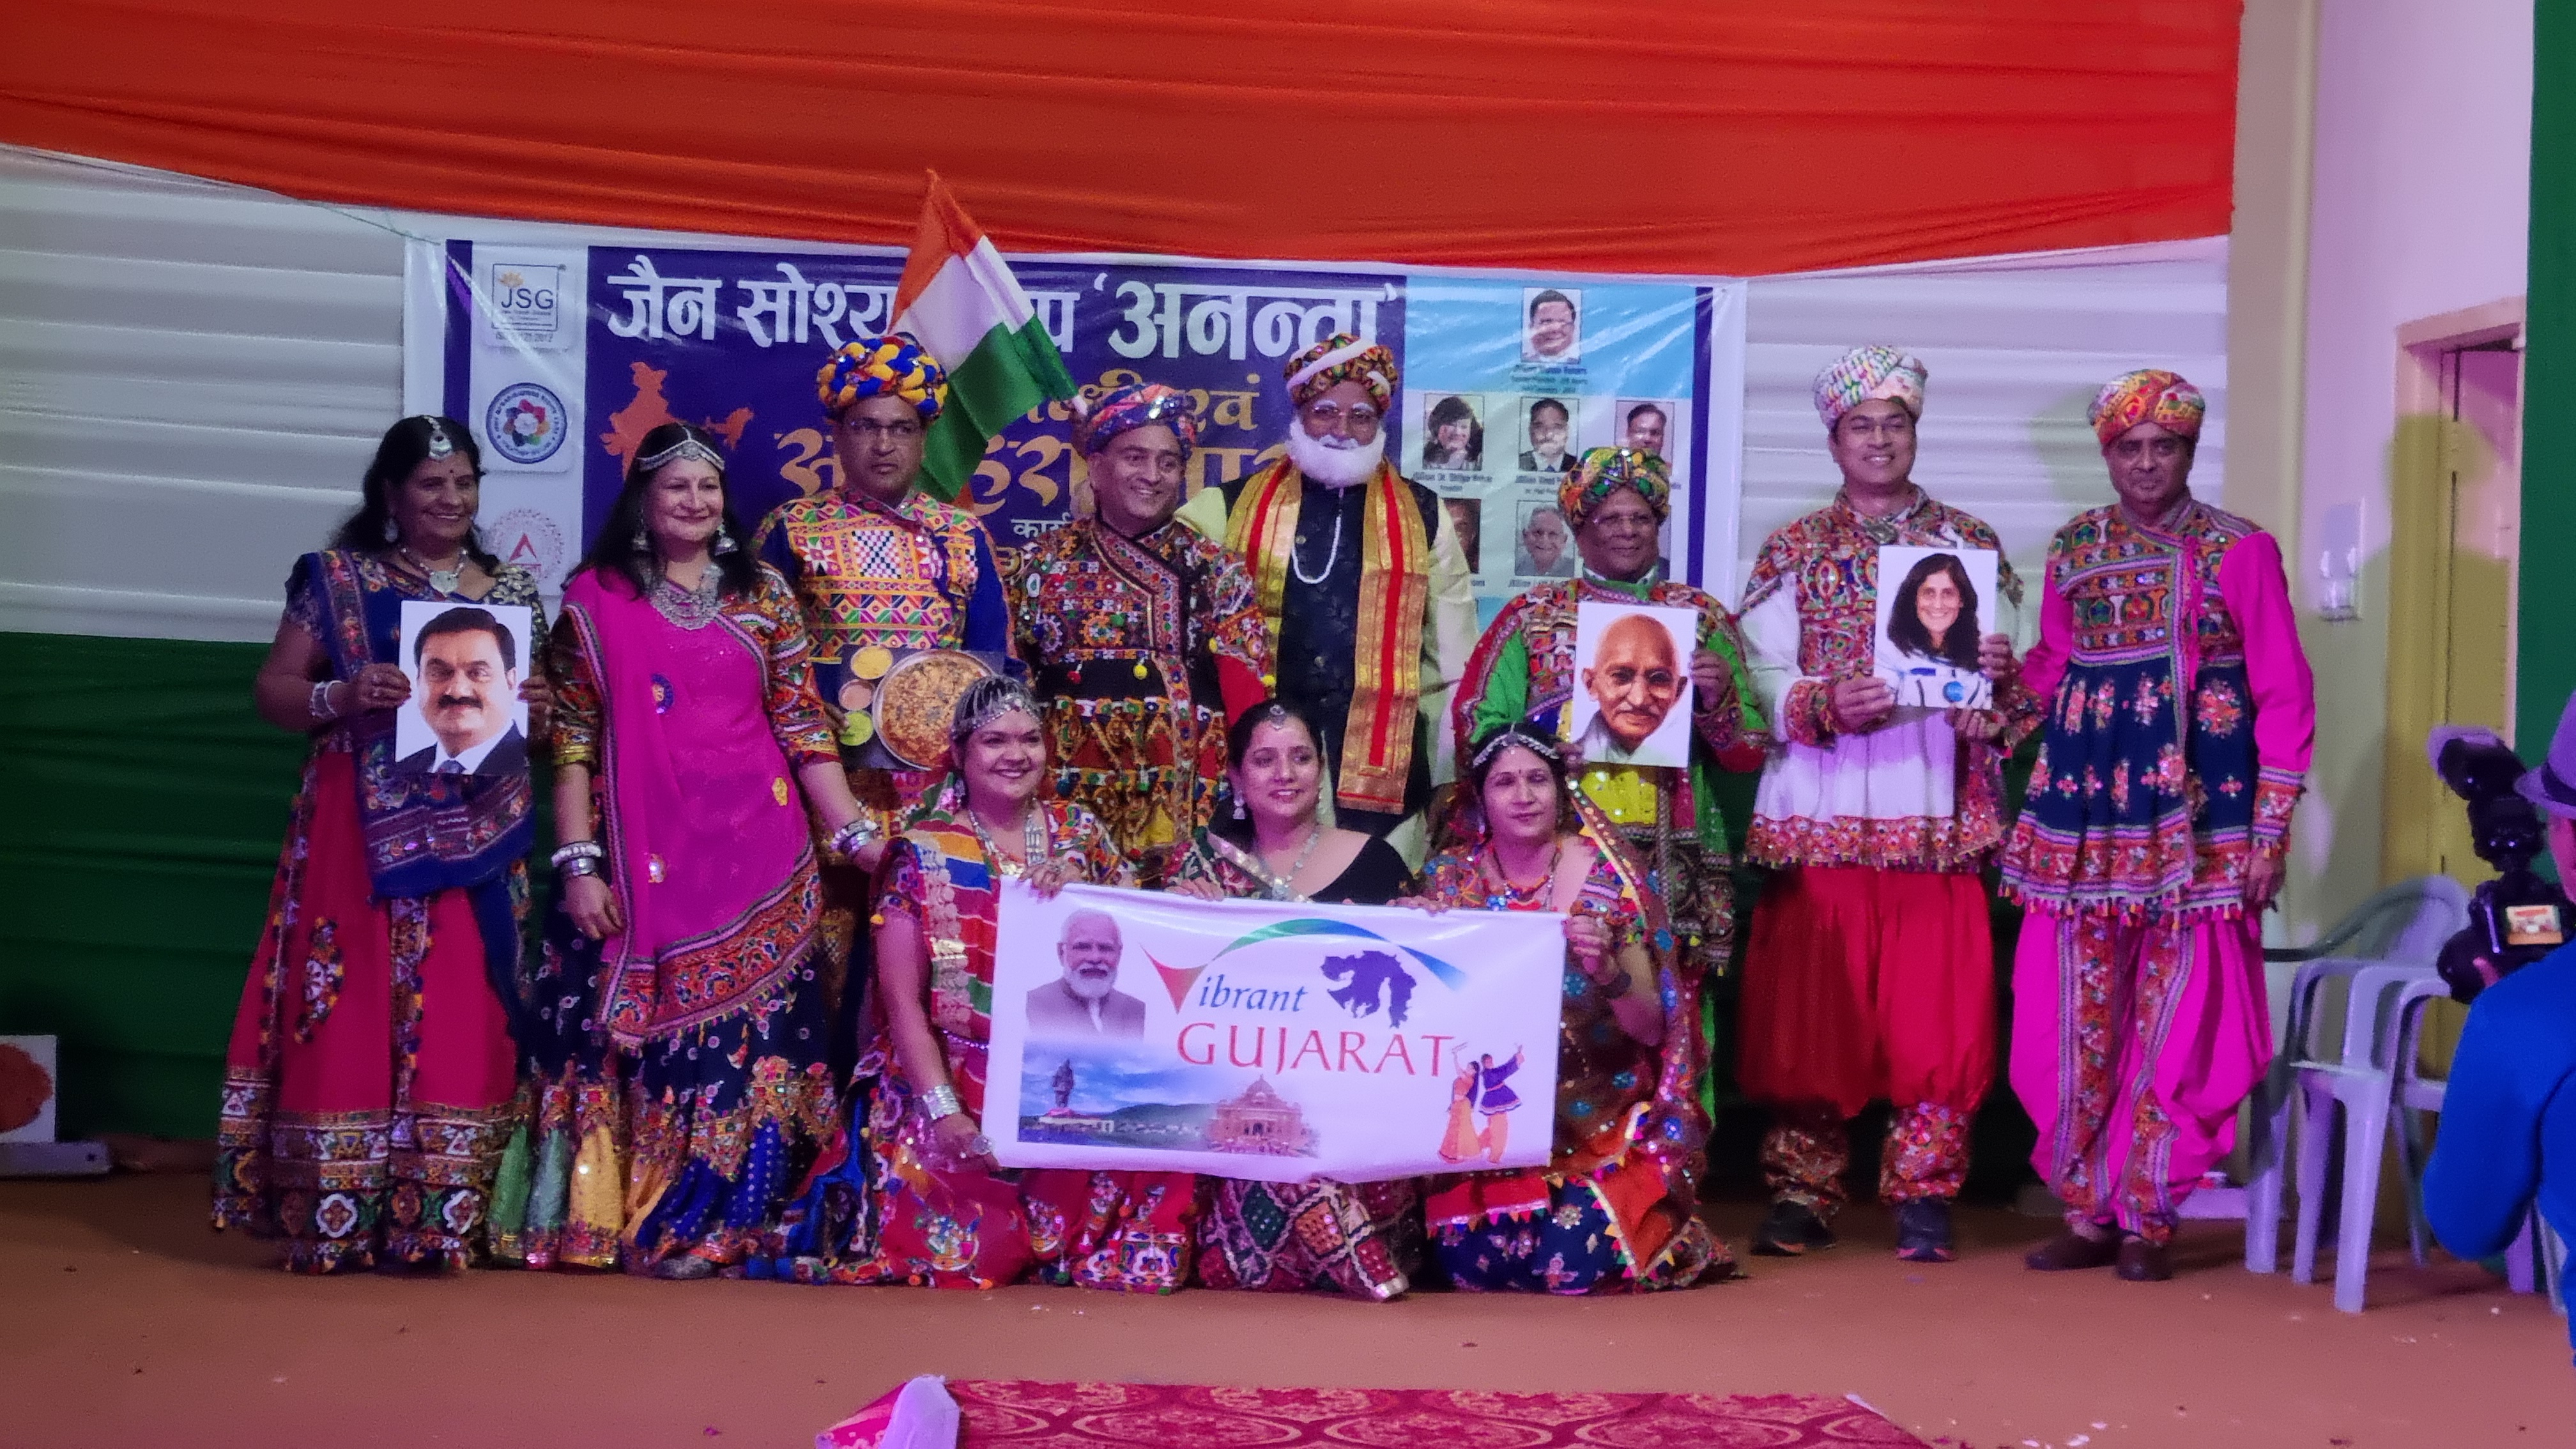 Cultural Showcase Highlights Rajasthan, Goa, Maharashtra, South India, Kashmir, and Punjab